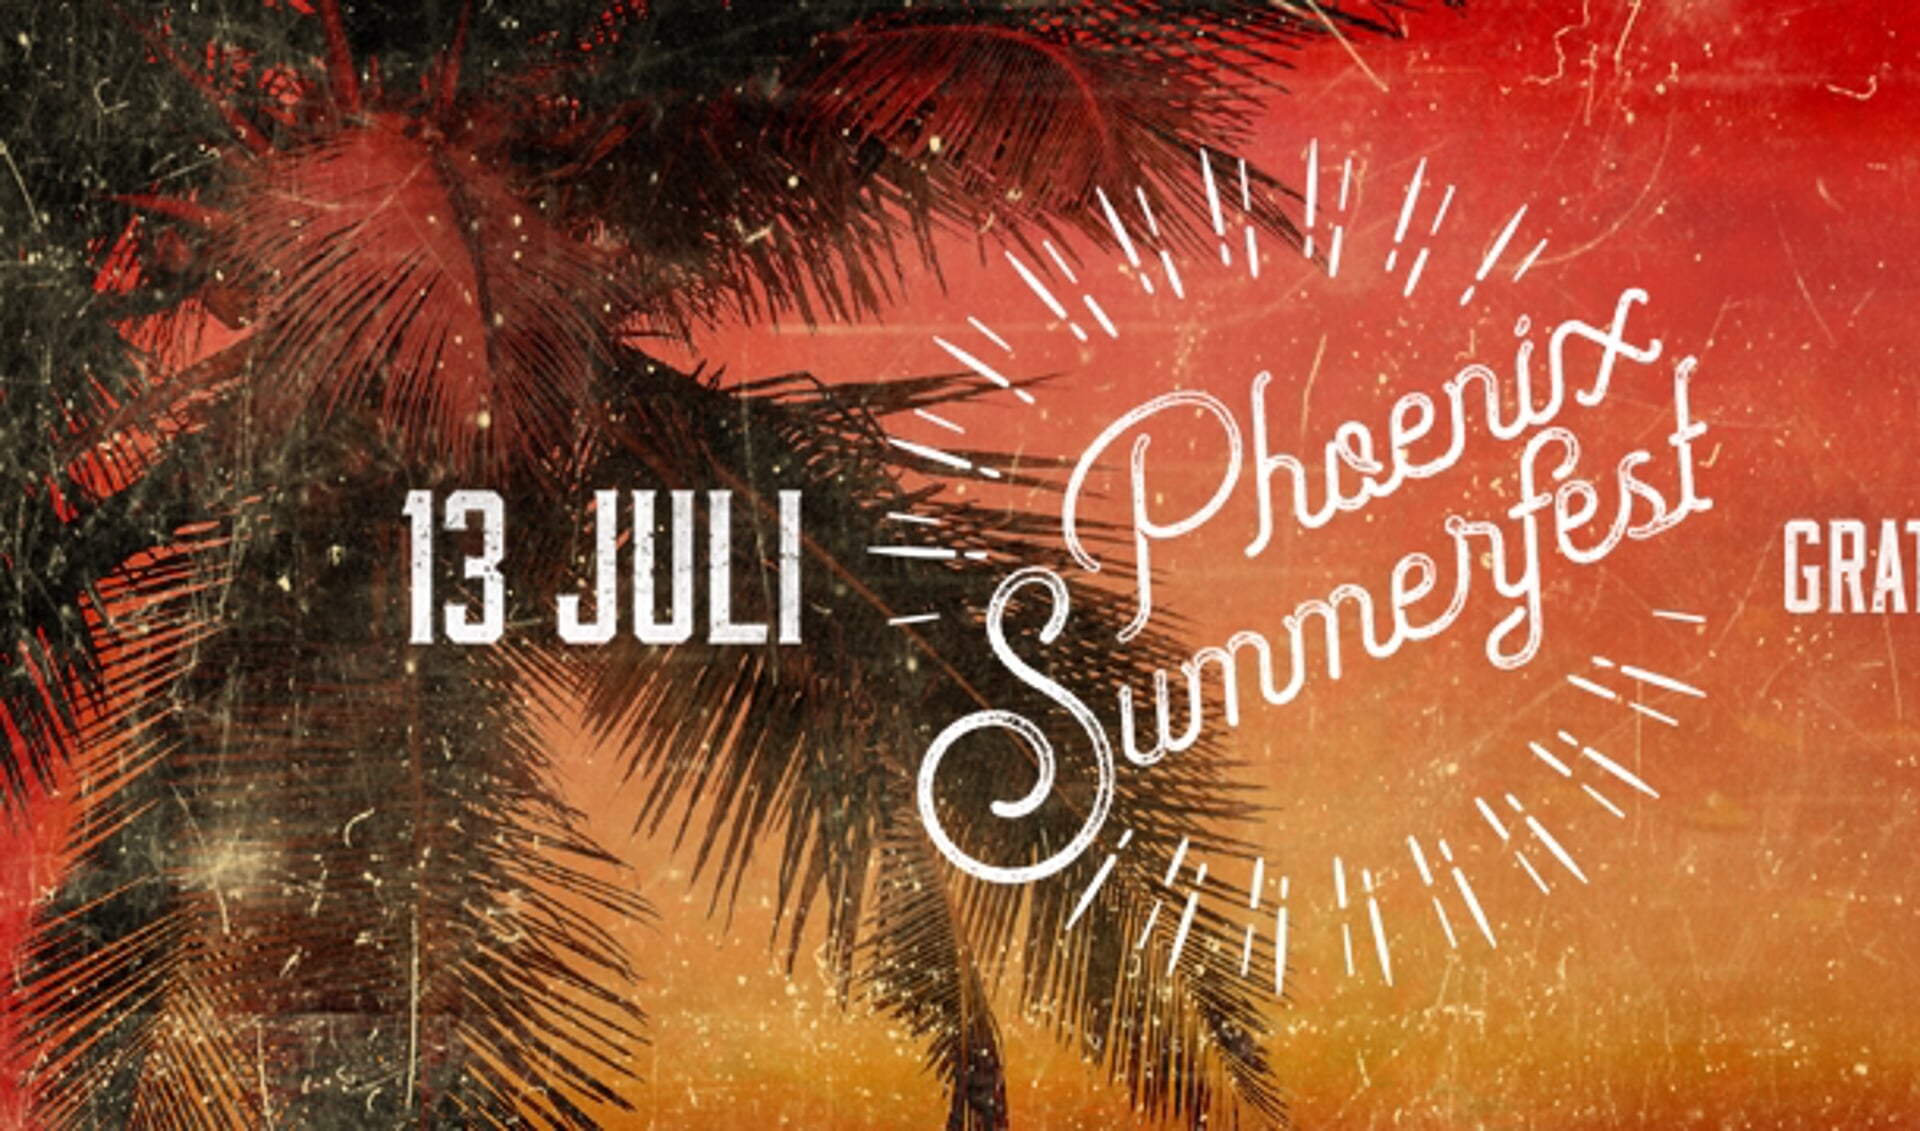 Phoenix Summerfest